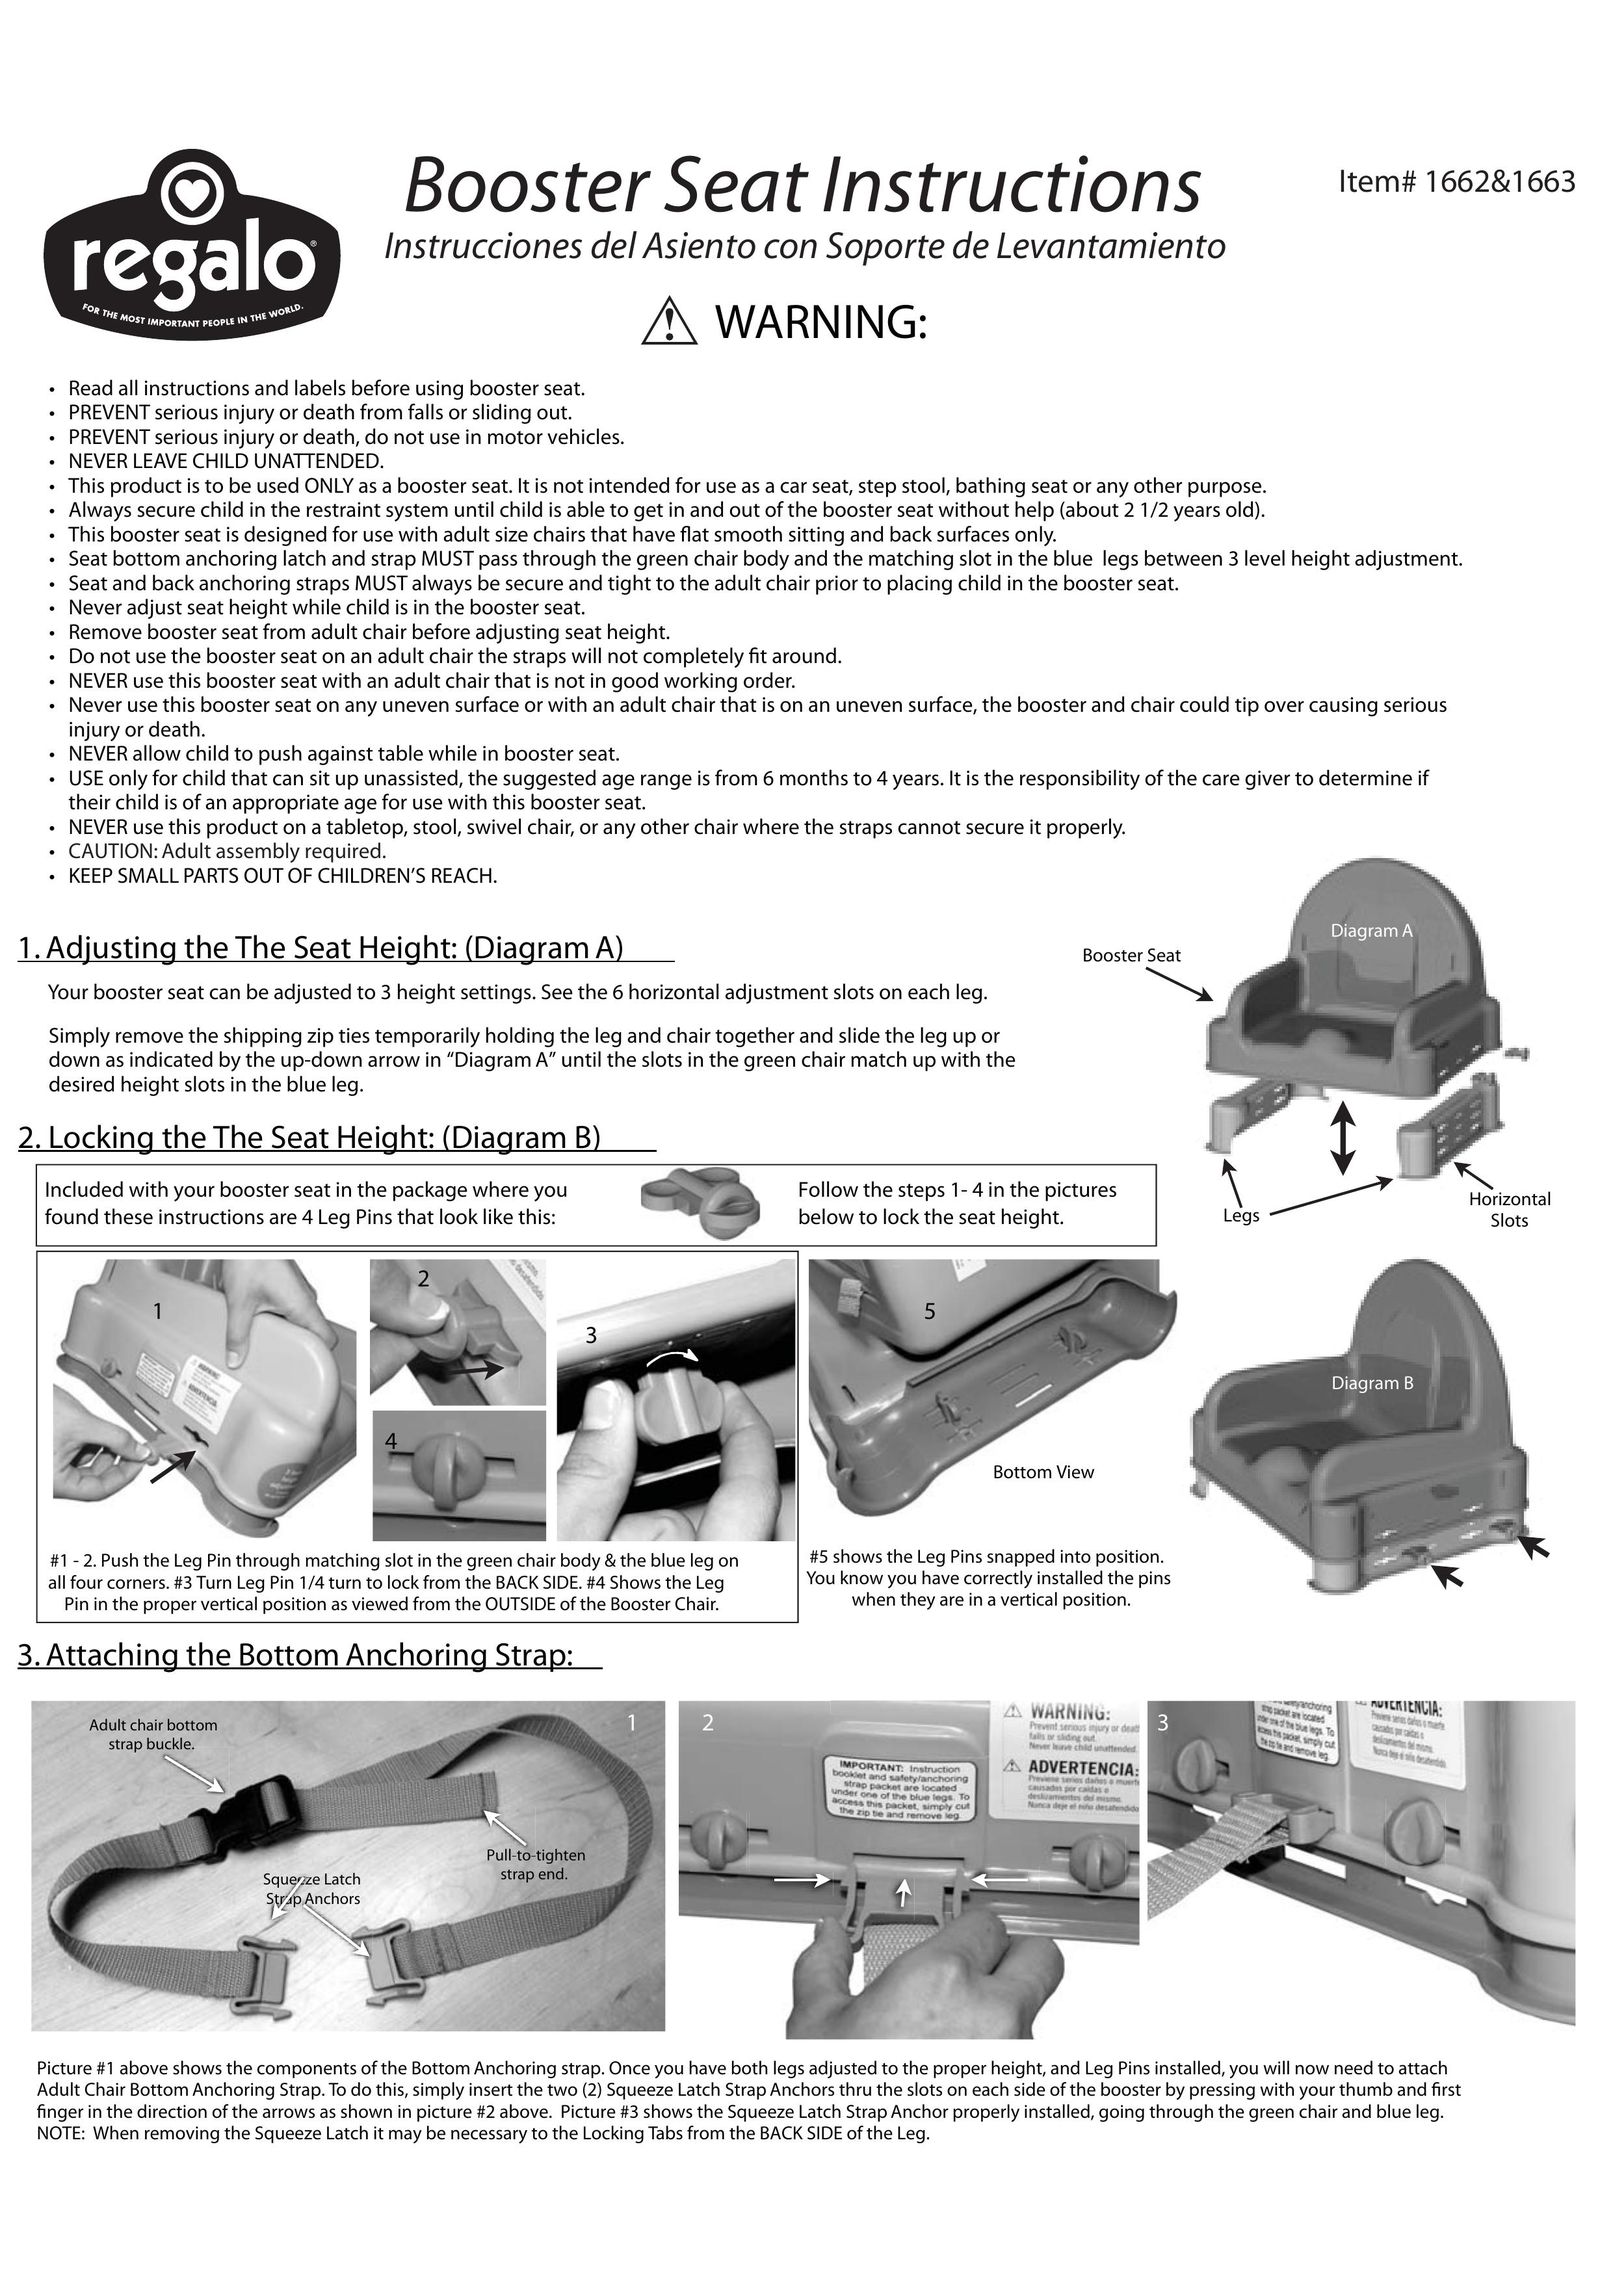 Regalo 1662 High Chair User Manual